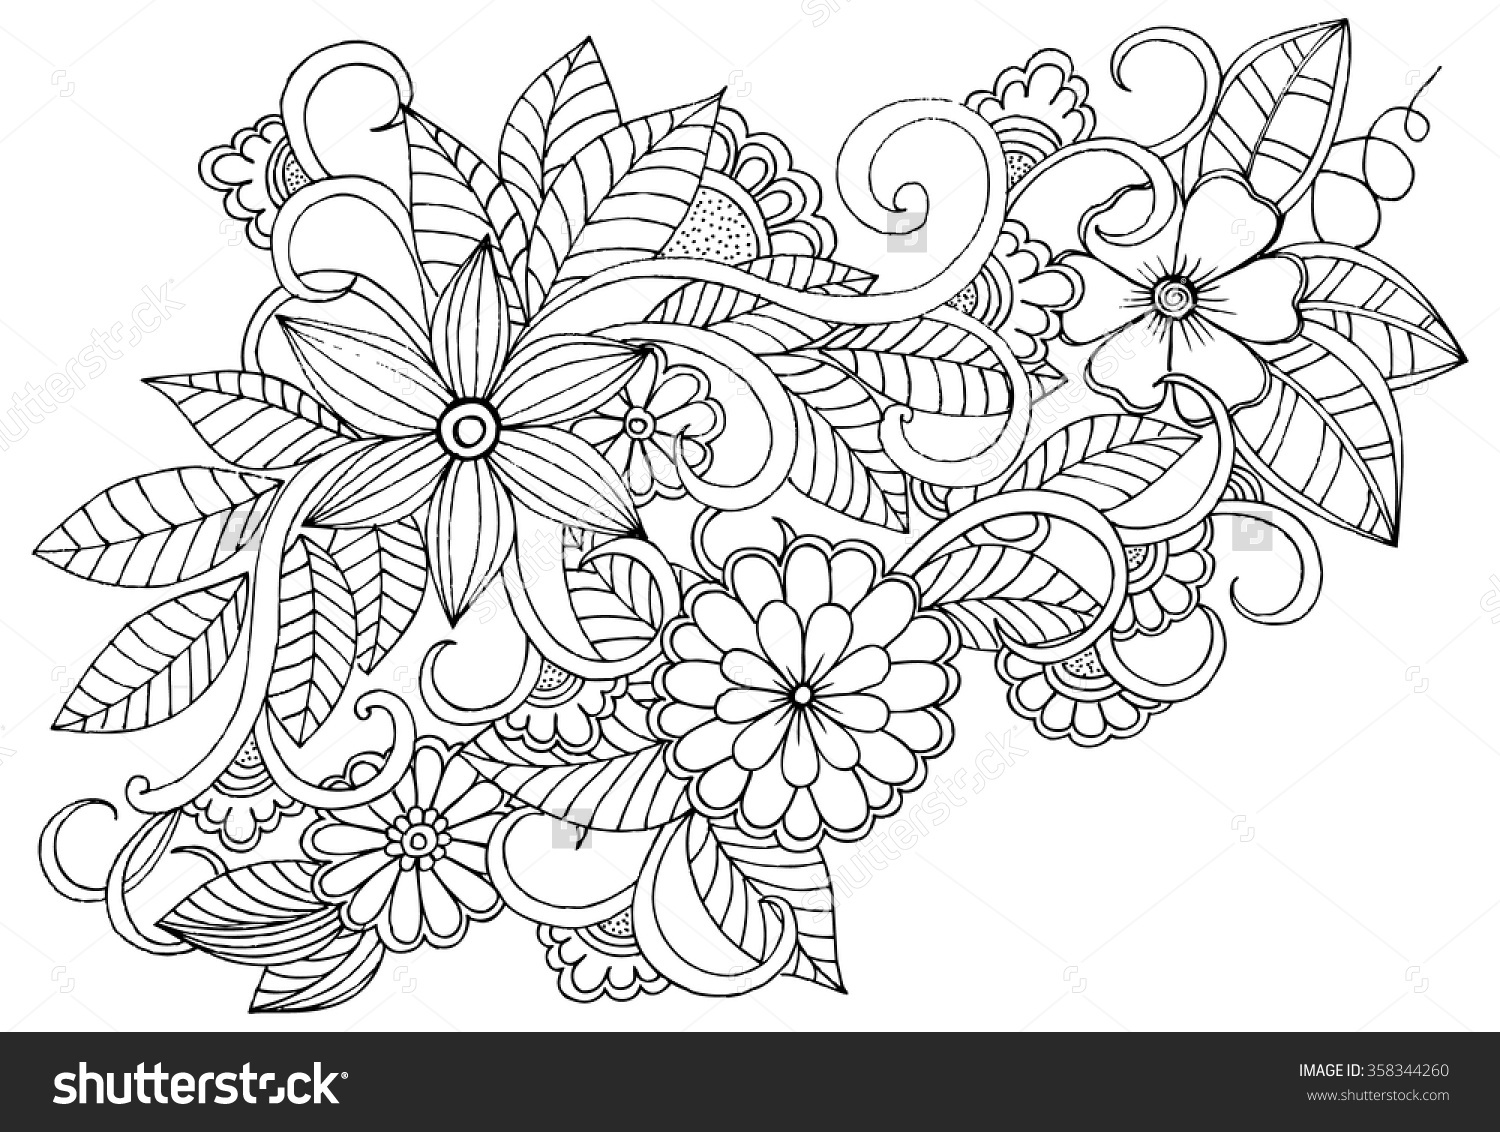 Carpet Of Leaves coloring #4, Download drawings